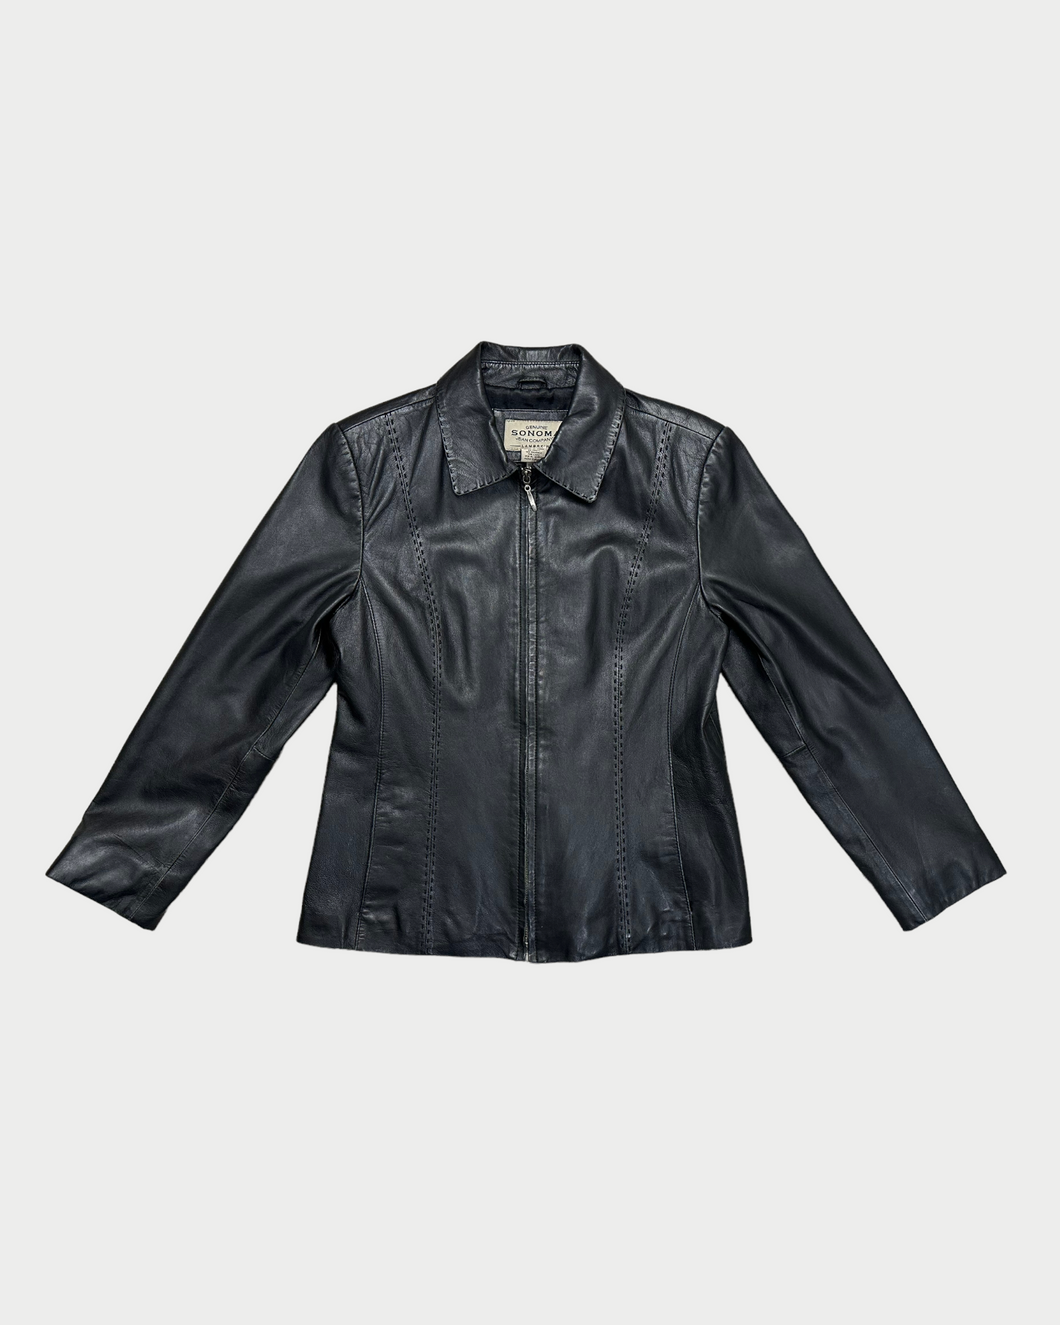 Sonoma Jean Company Black Leather Jacket (M)